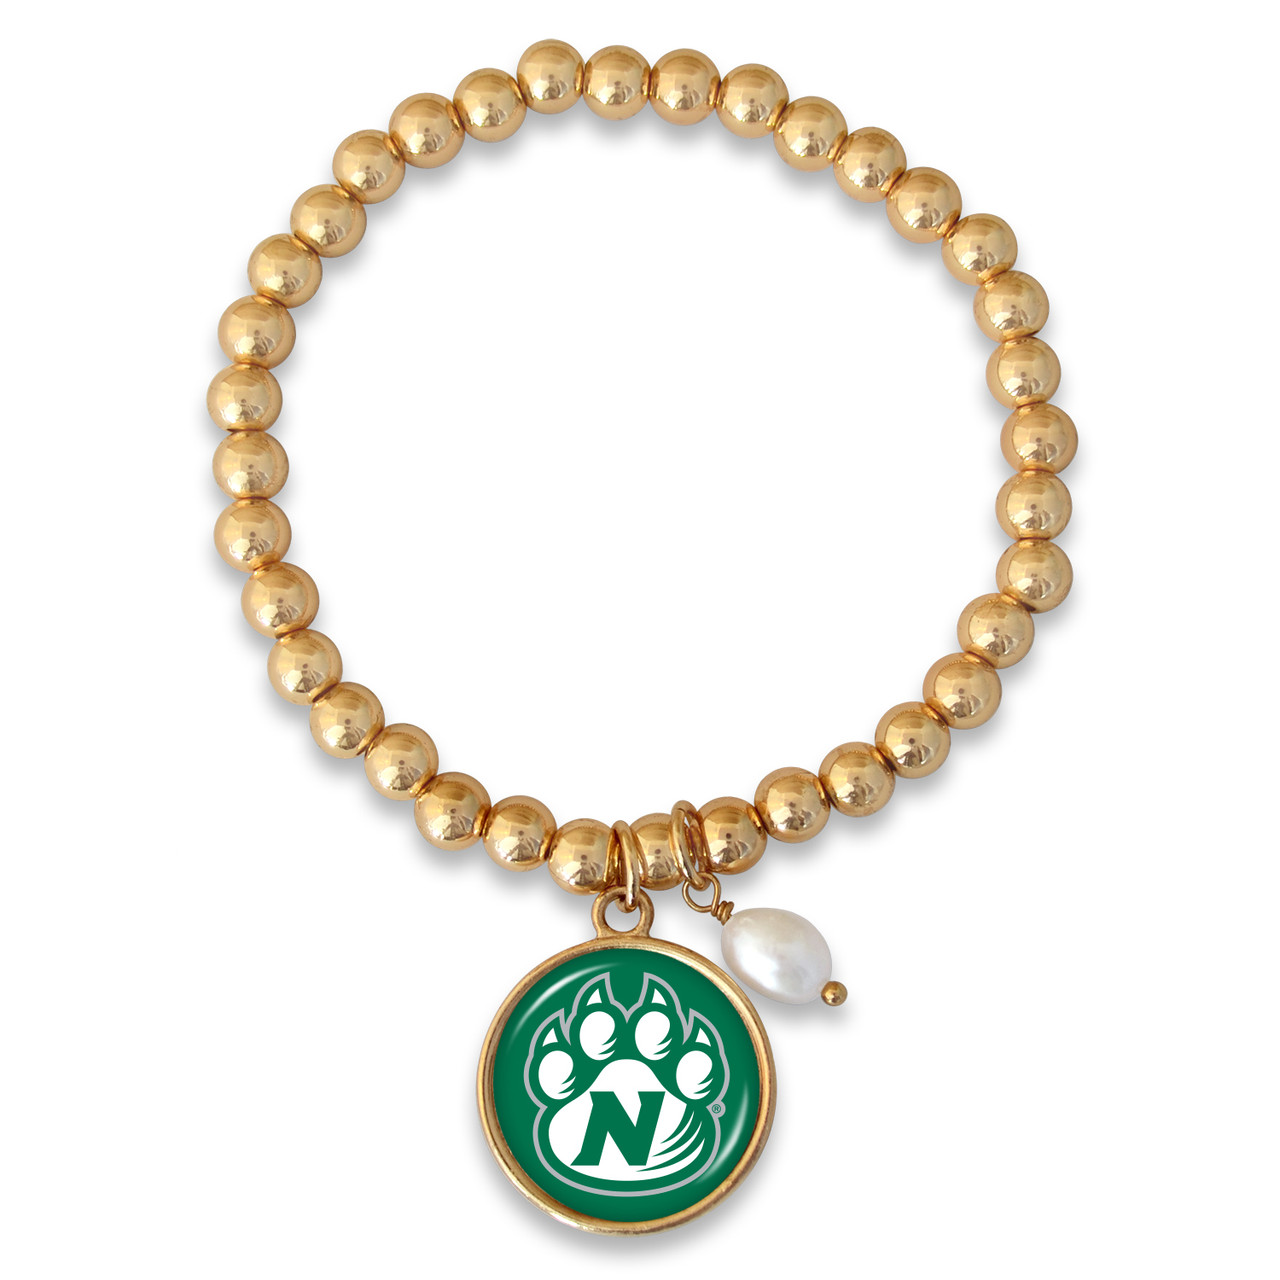 Northwest Missouri State Bearcats Bracelet - Diana